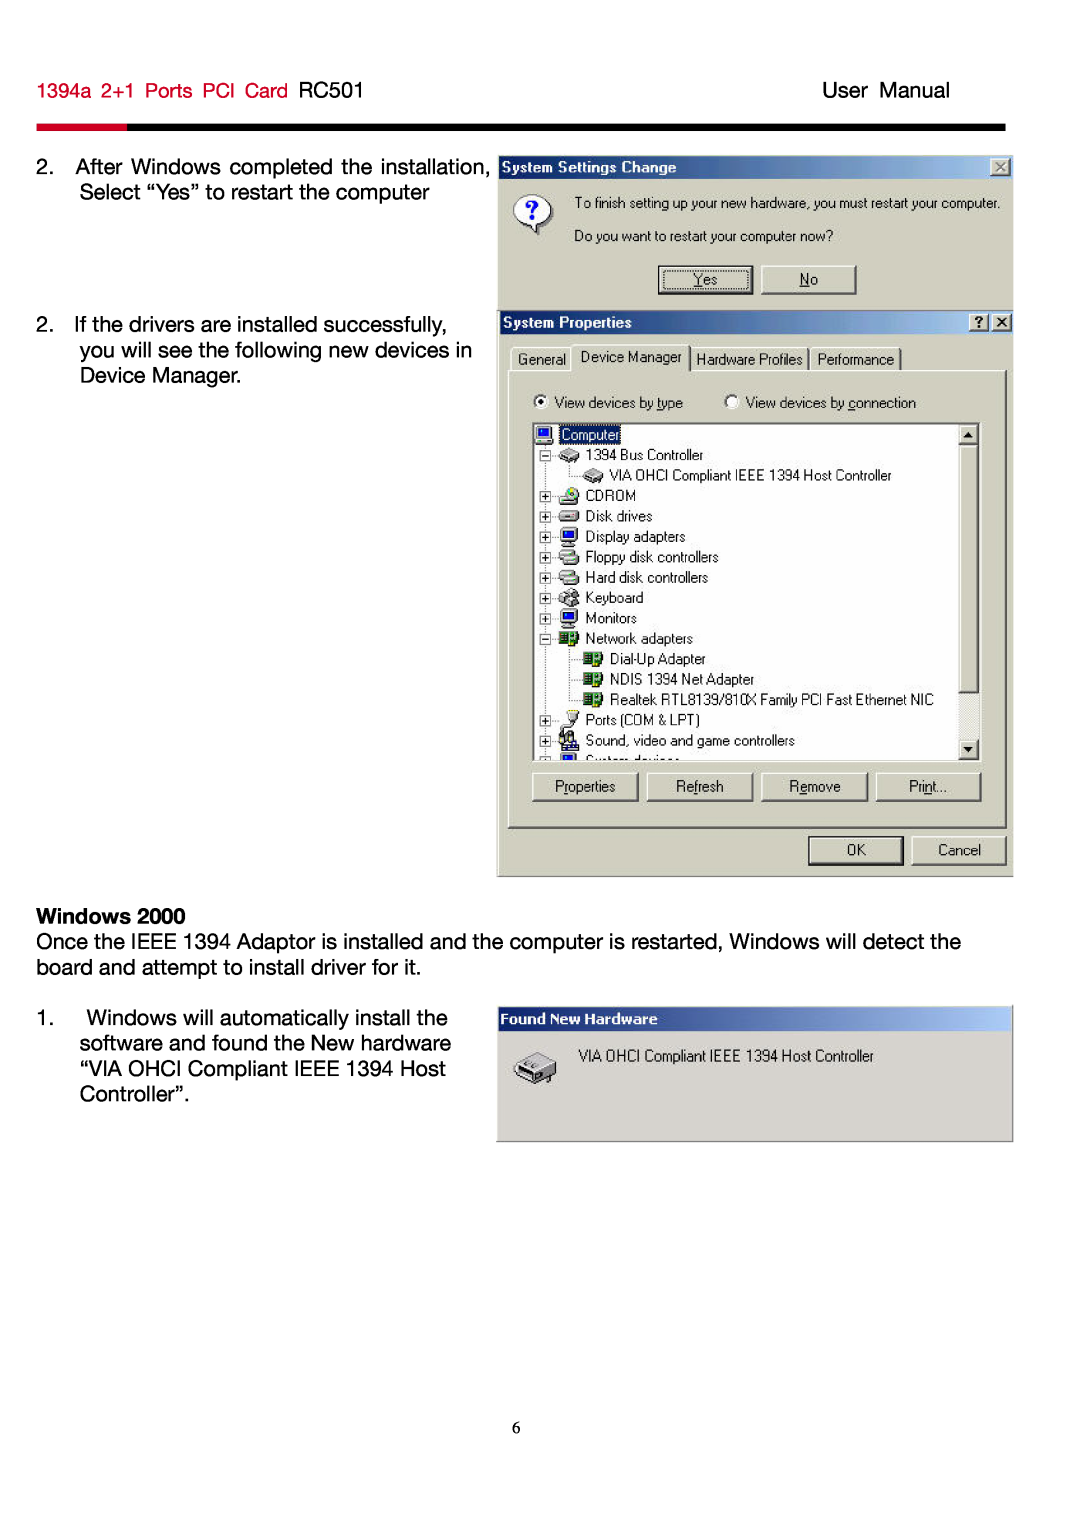 Rosewill RC501 user manual Windows 